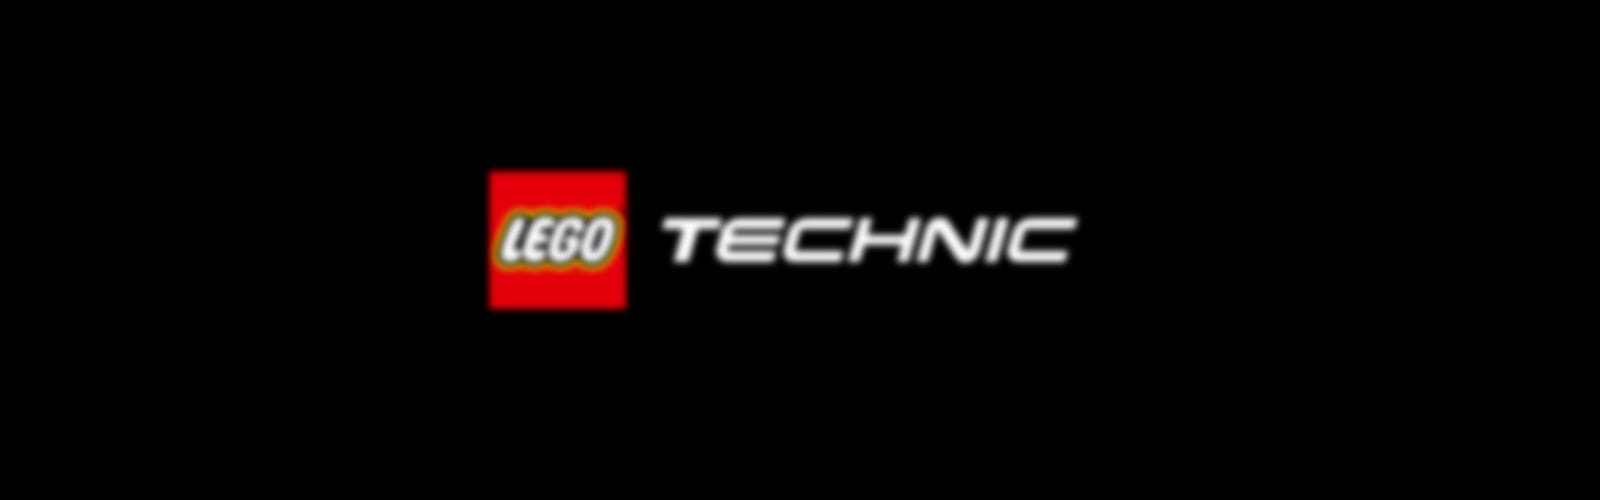 42158 - LEGO® Technic - NASA Mars Rover Perseverance LEGO : King Jouet, Lego,  briques et blocs LEGO - Jeux de construction